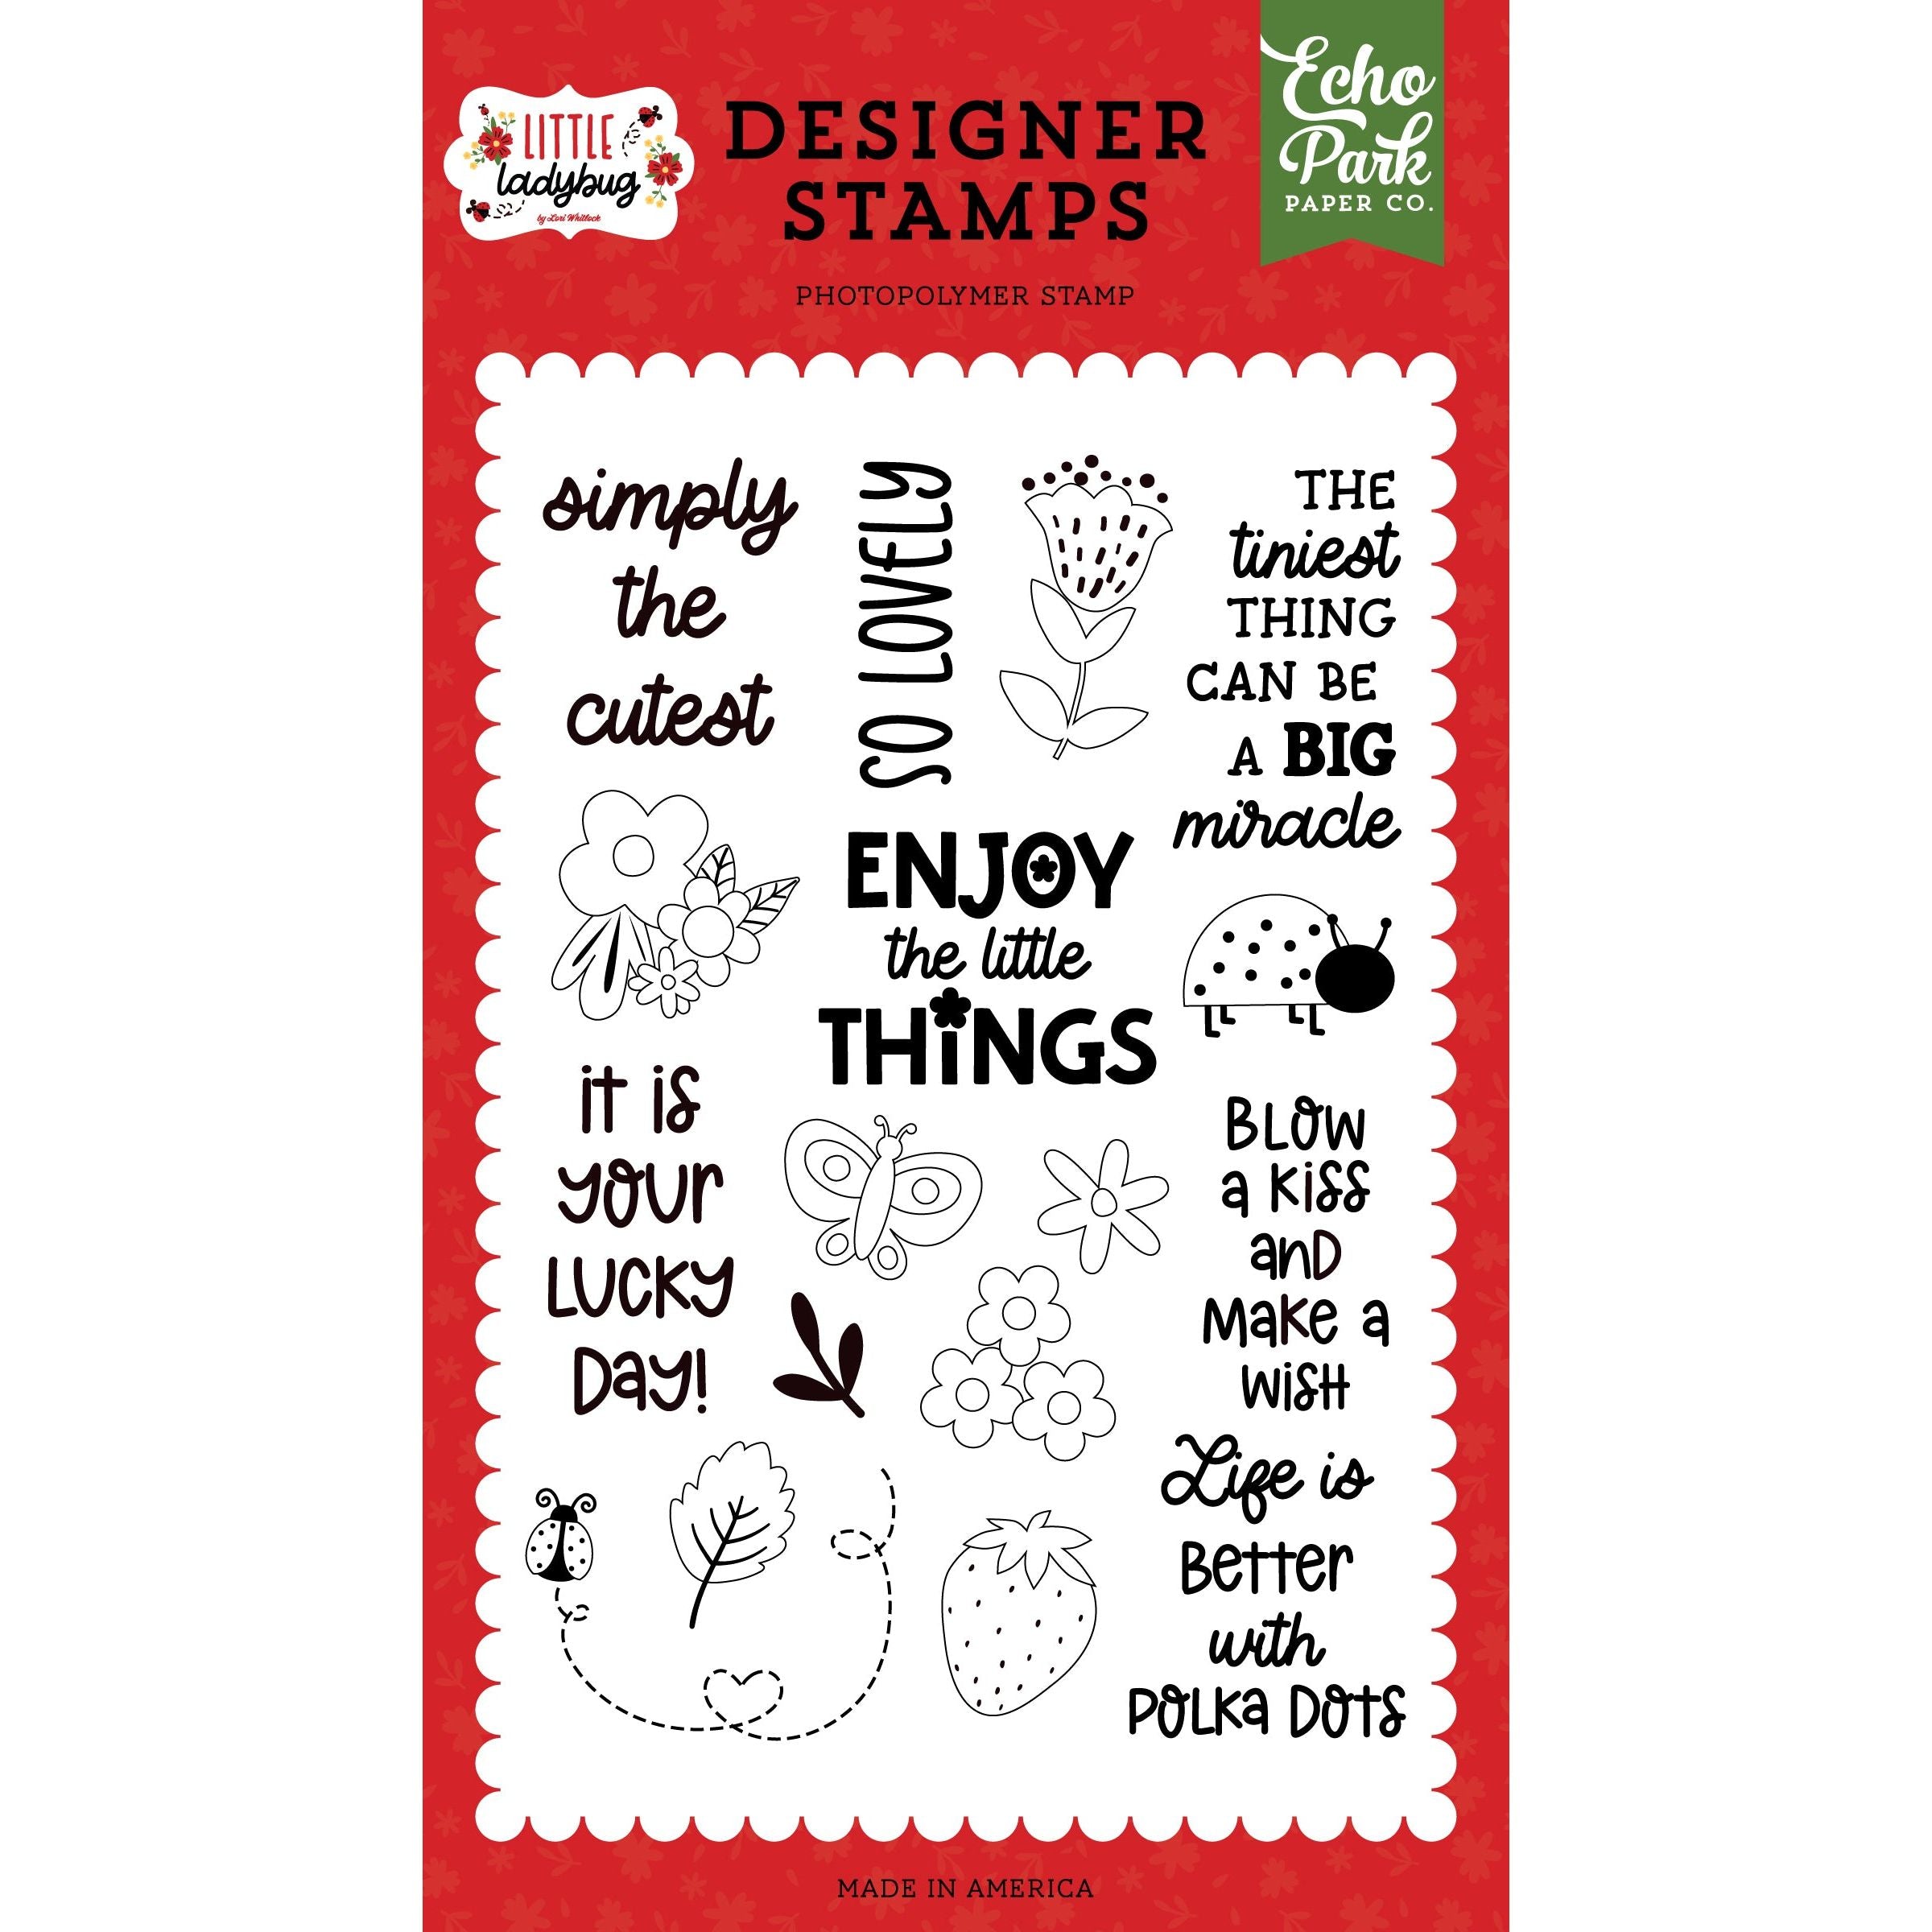 Designer Stamps: Post Card 4x6 Stamp - Echo Park Paper Co.